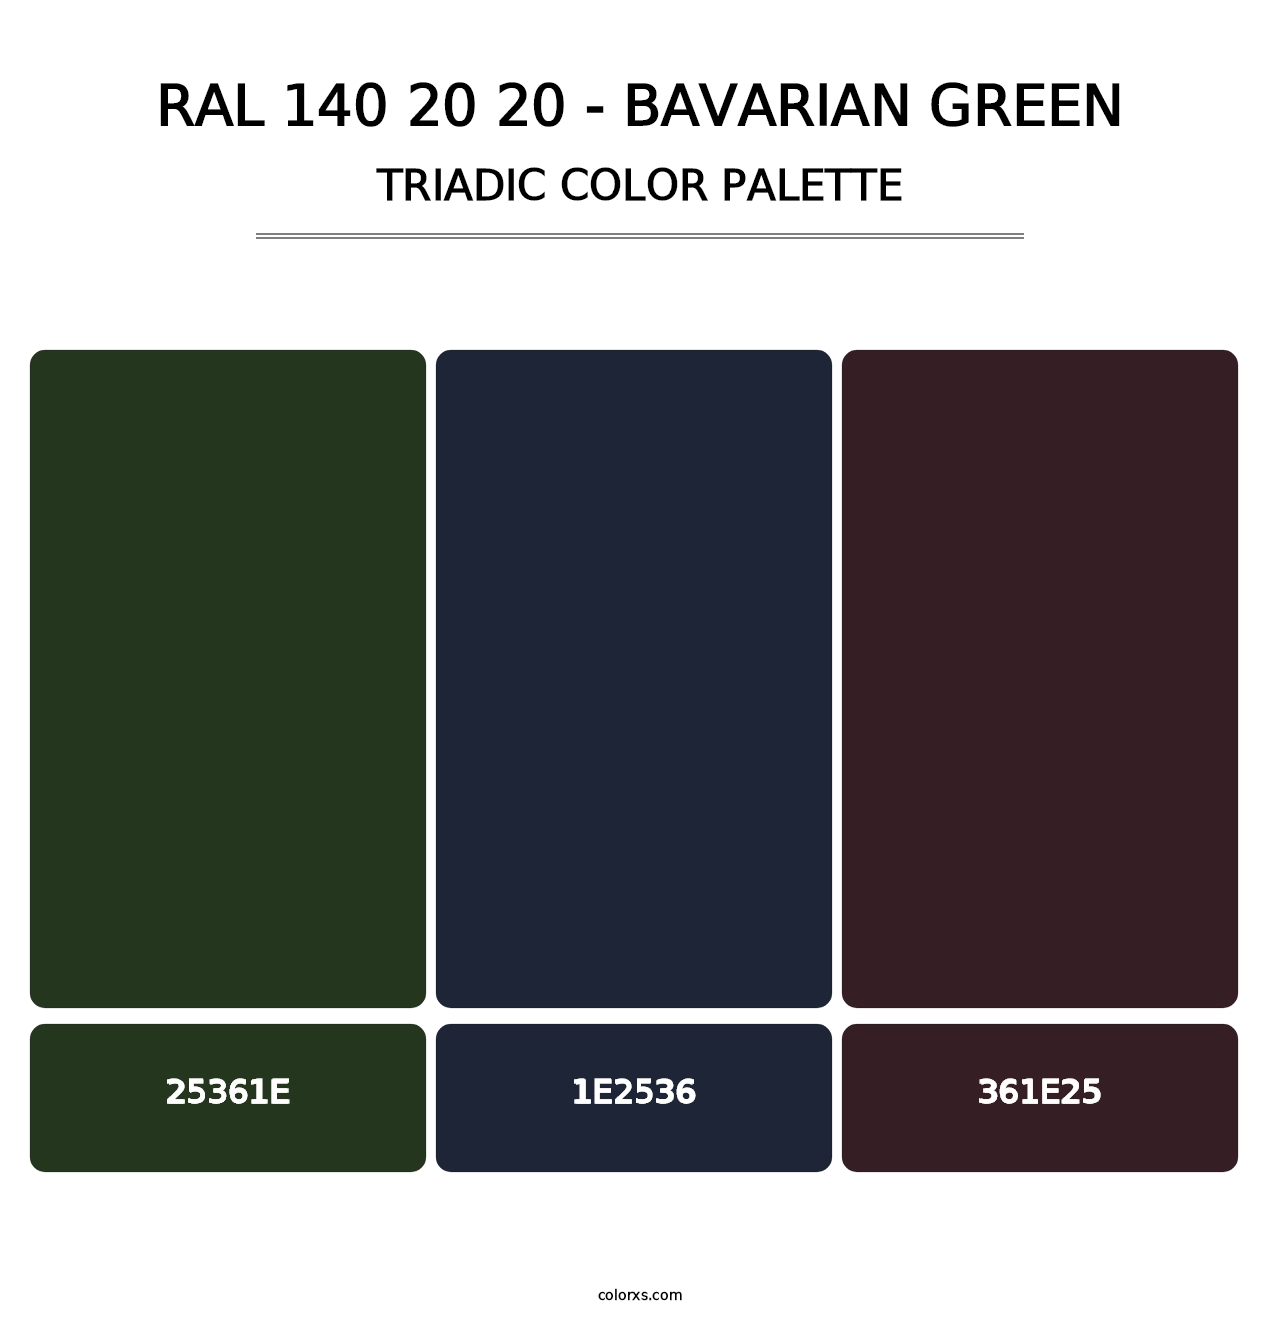 RAL 140 20 20 - Bavarian Green - Triadic Color Palette